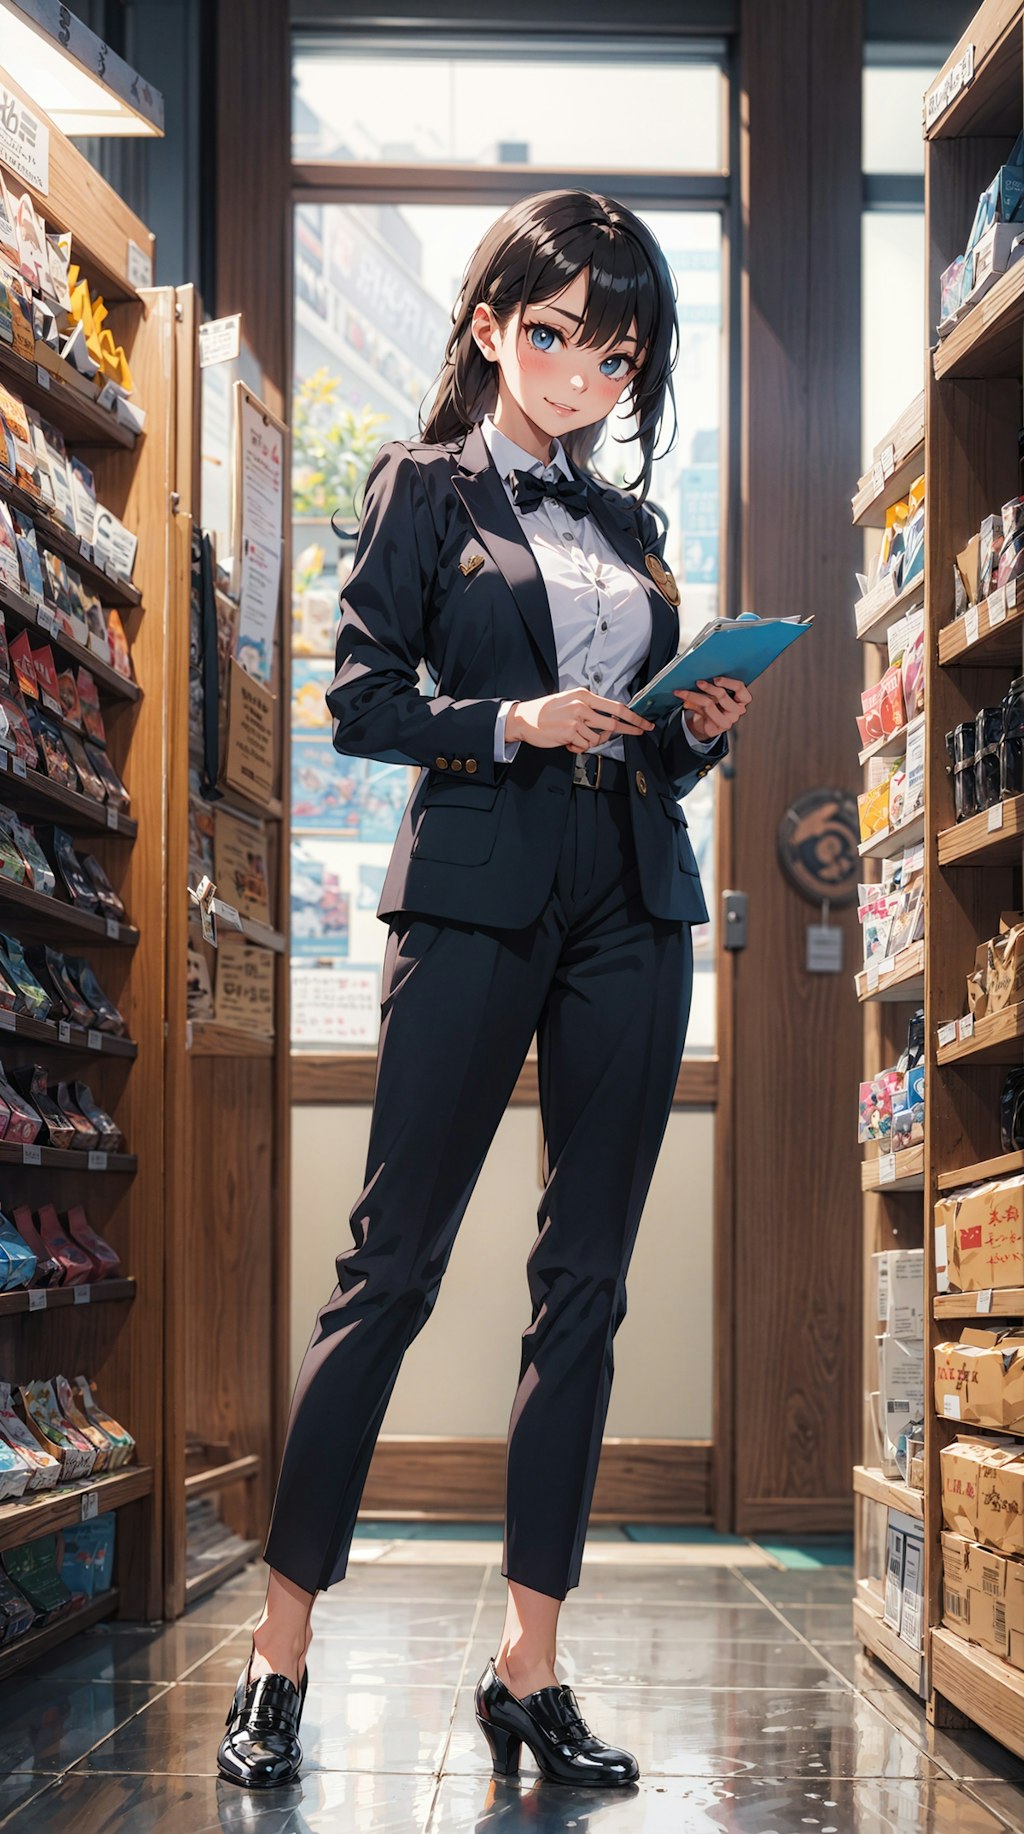 shoe store clerk